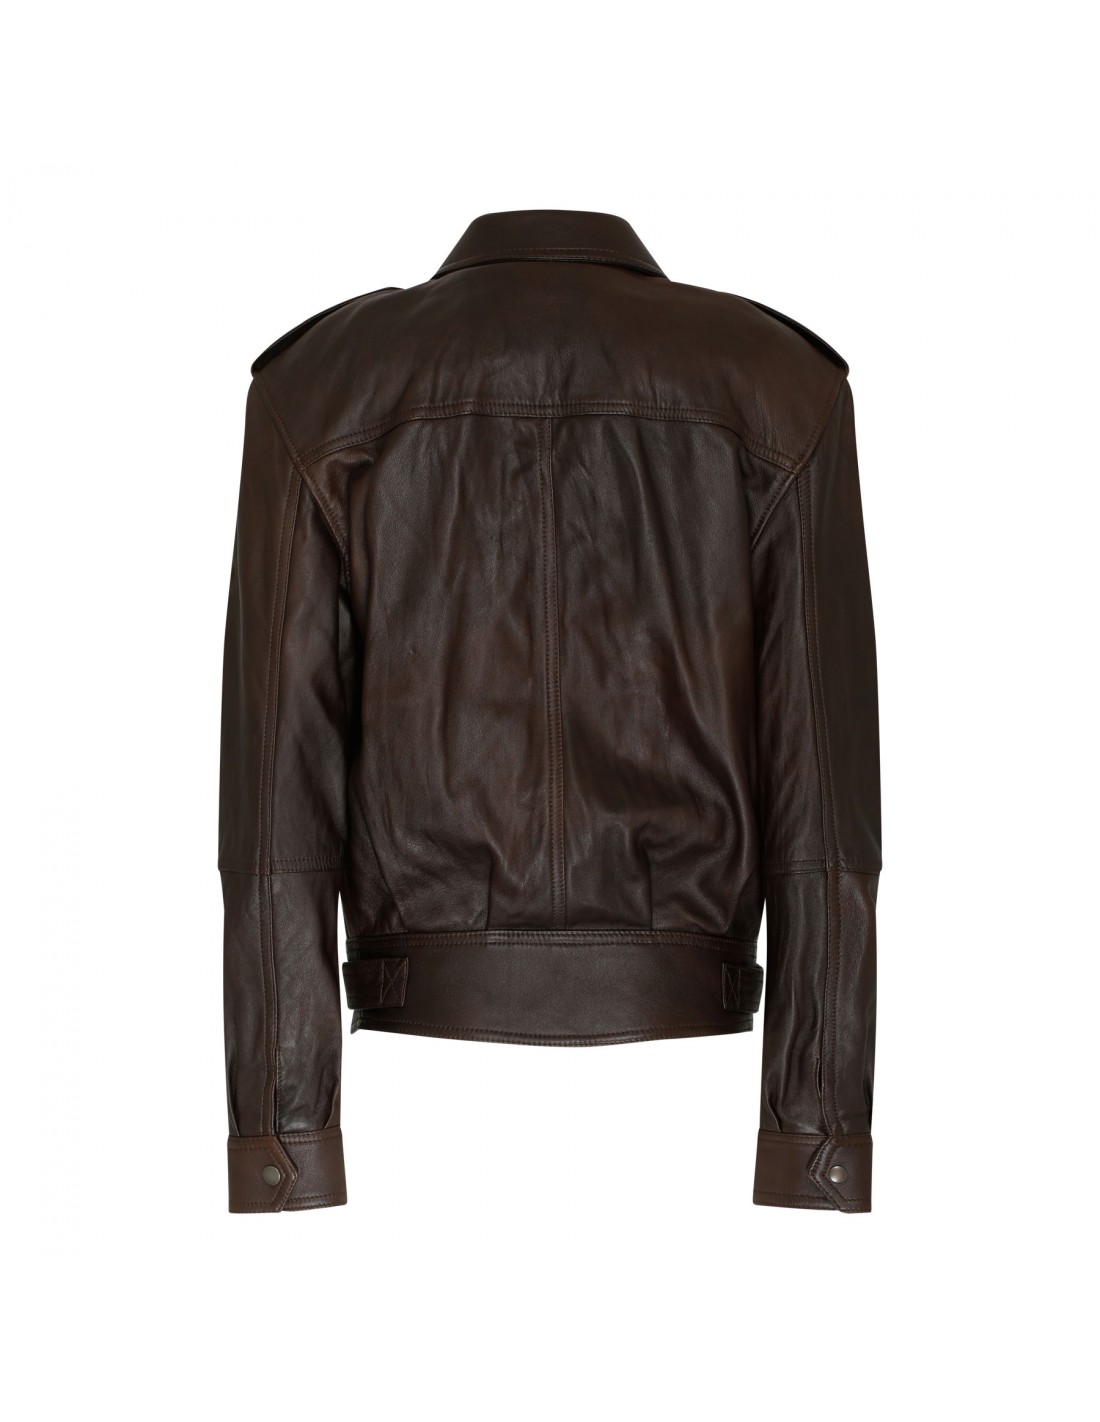 Crinkled leather jacket